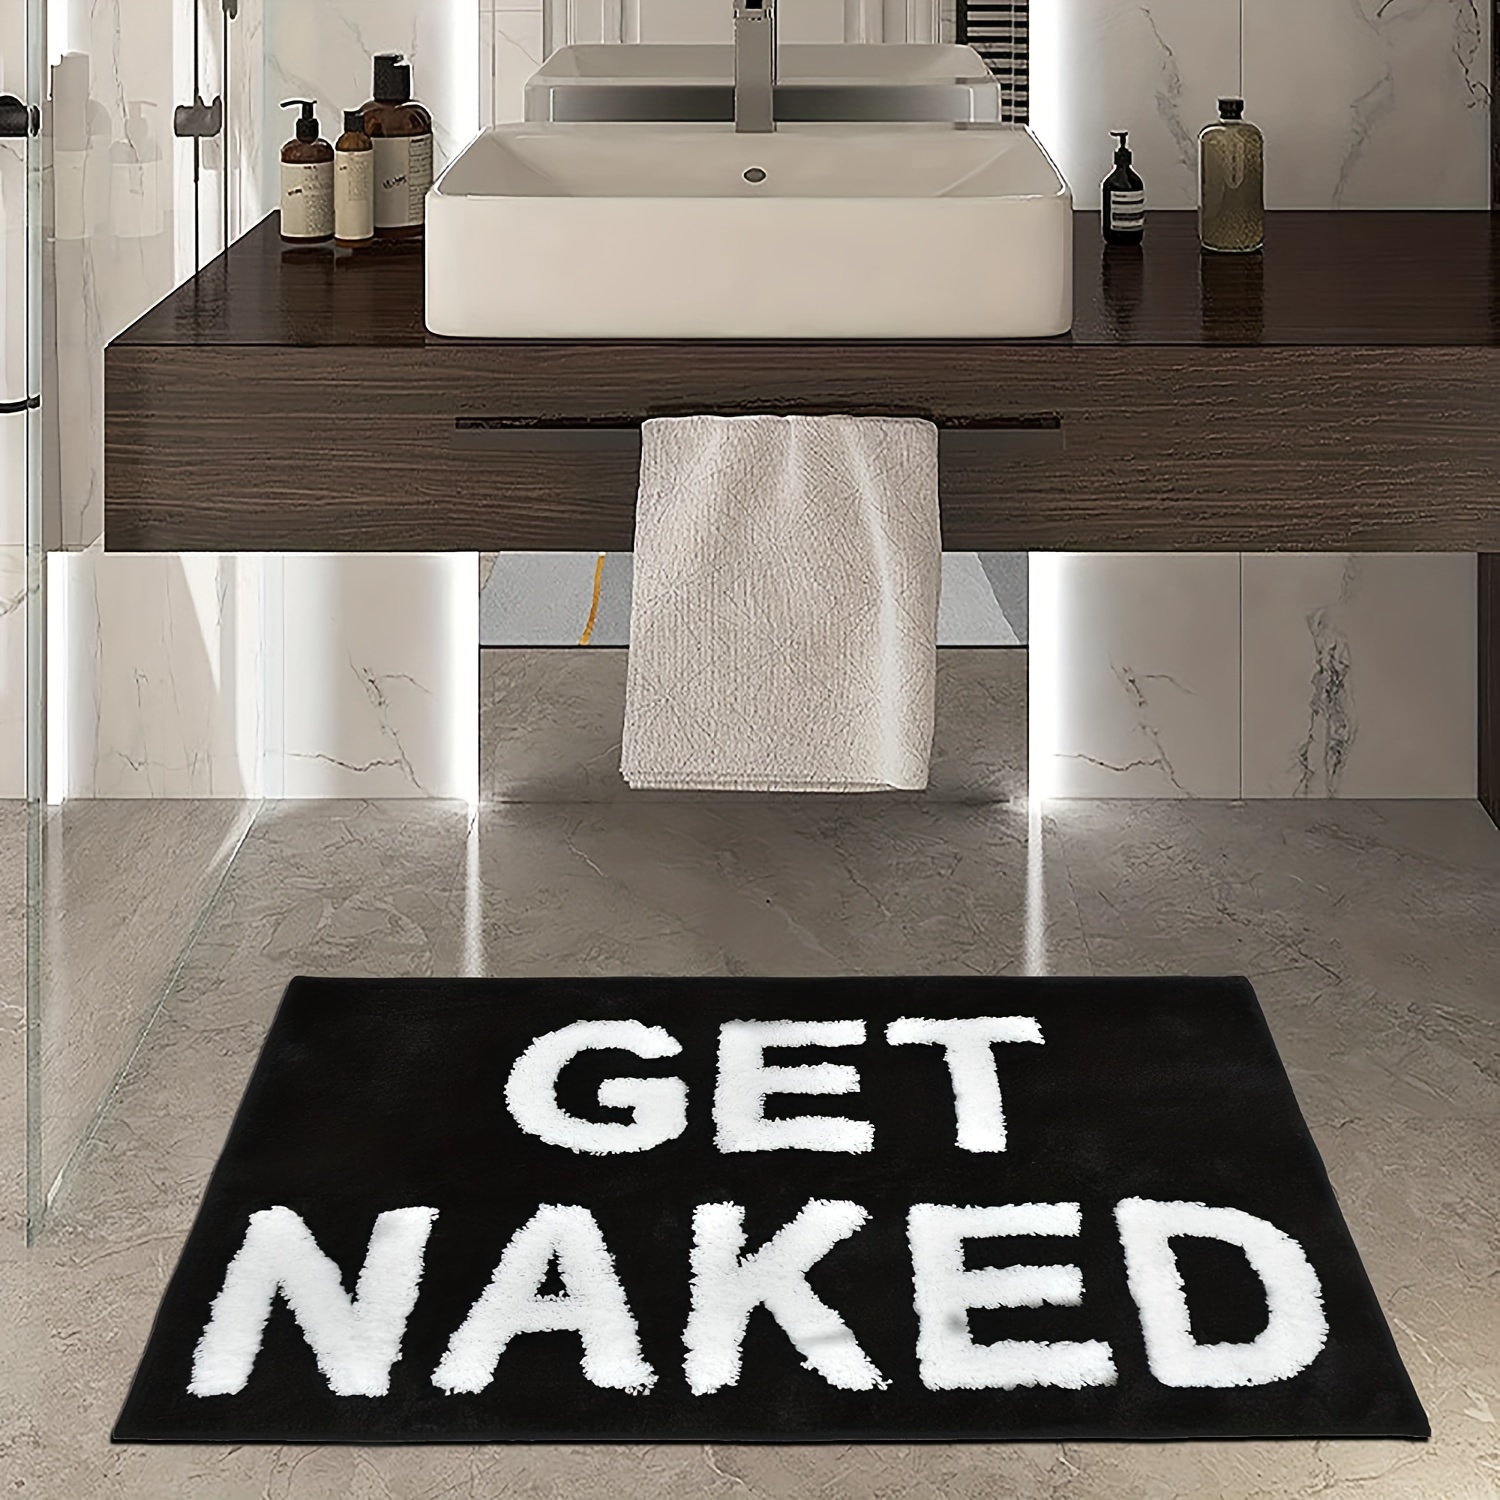 Take It Off Bath Mat, Cute Bathroom Rug Microfiber Funny Shower Bath Rug  Non Slip Get Naked Mat, Home Decor Carpet Super Absorbent Toilet Floor Mat